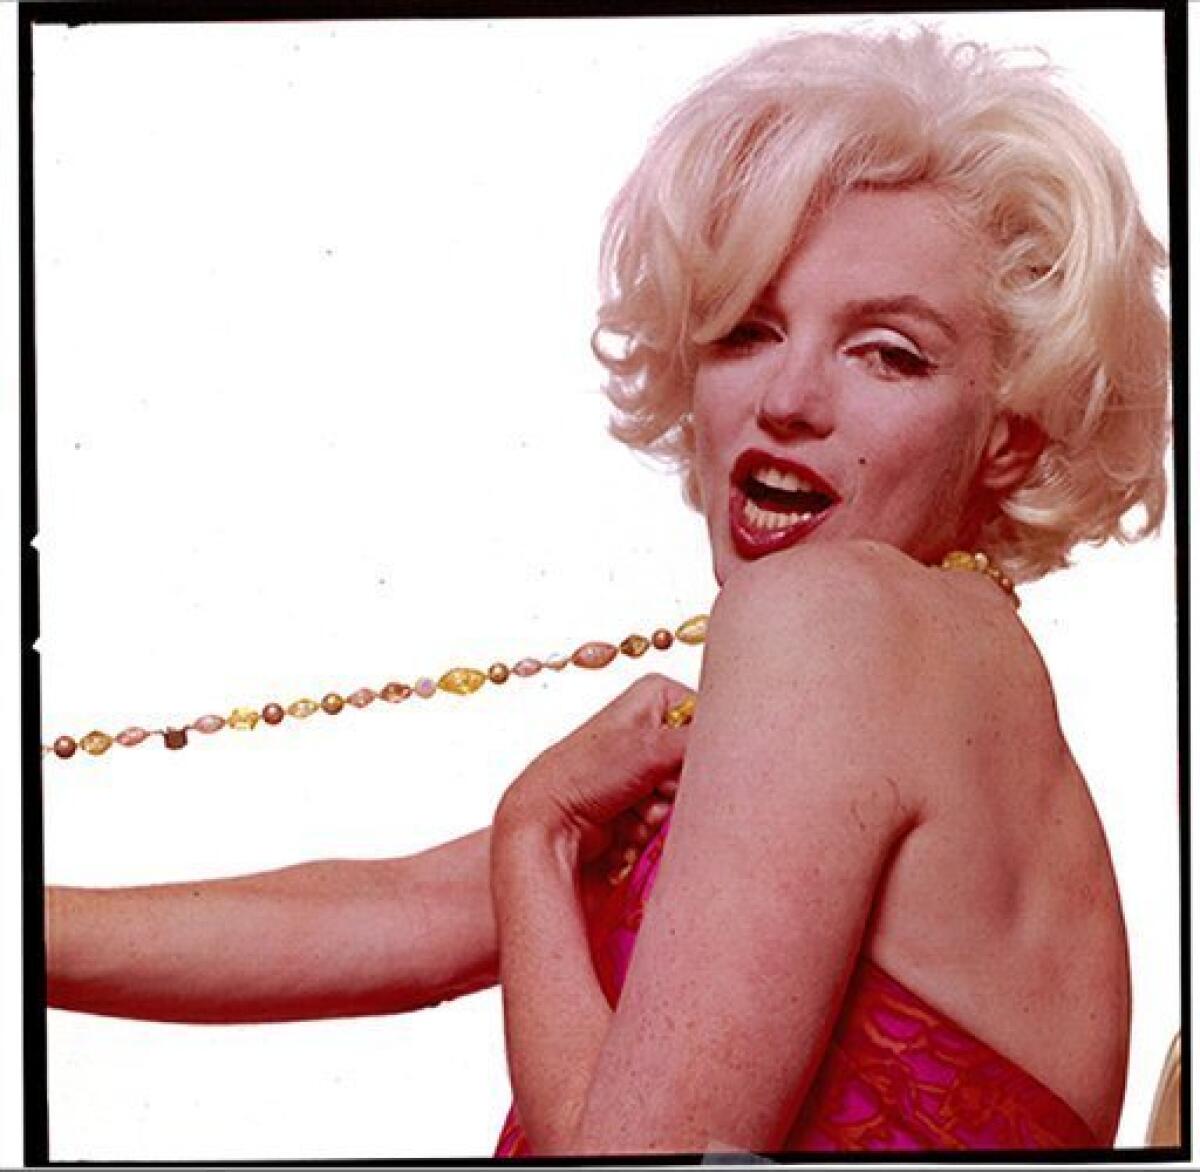 Accord in Marilyn Monroe `Last Sitting' photos - The San Diego